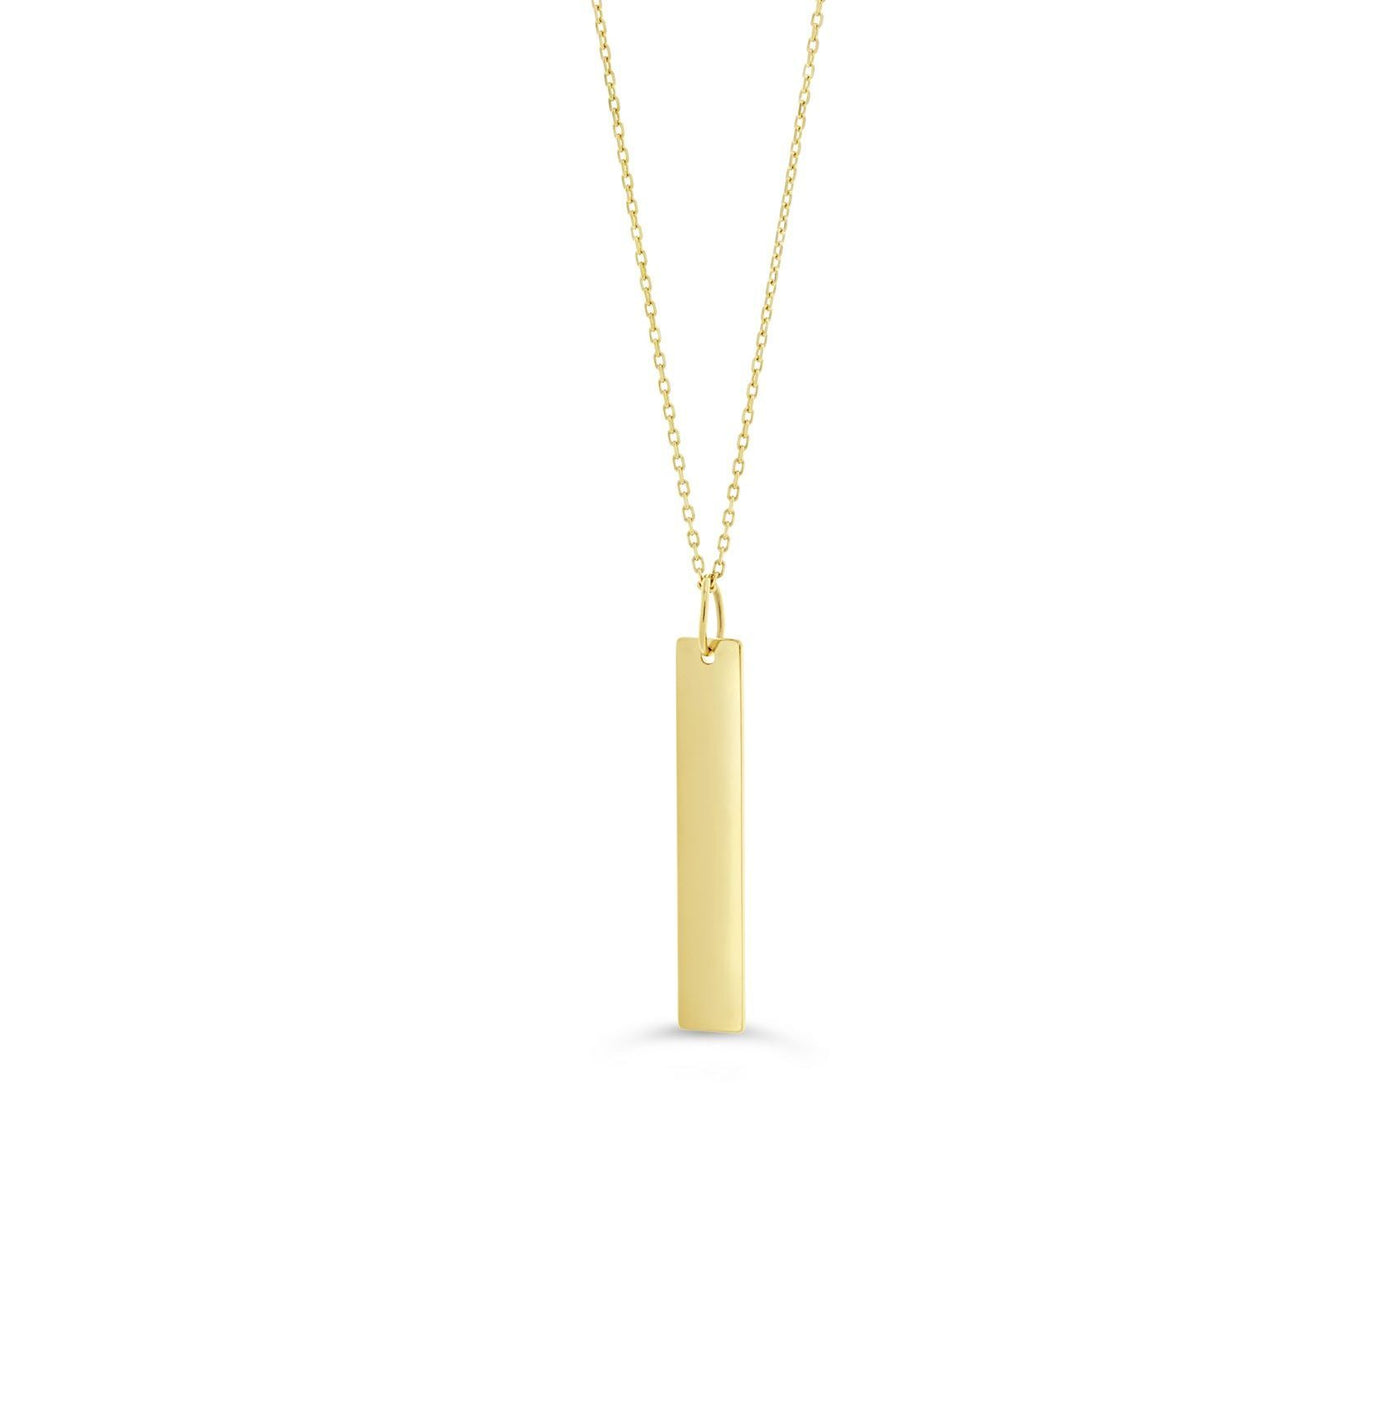 10 Karat Yellow Gold Vertical Bar Necklace